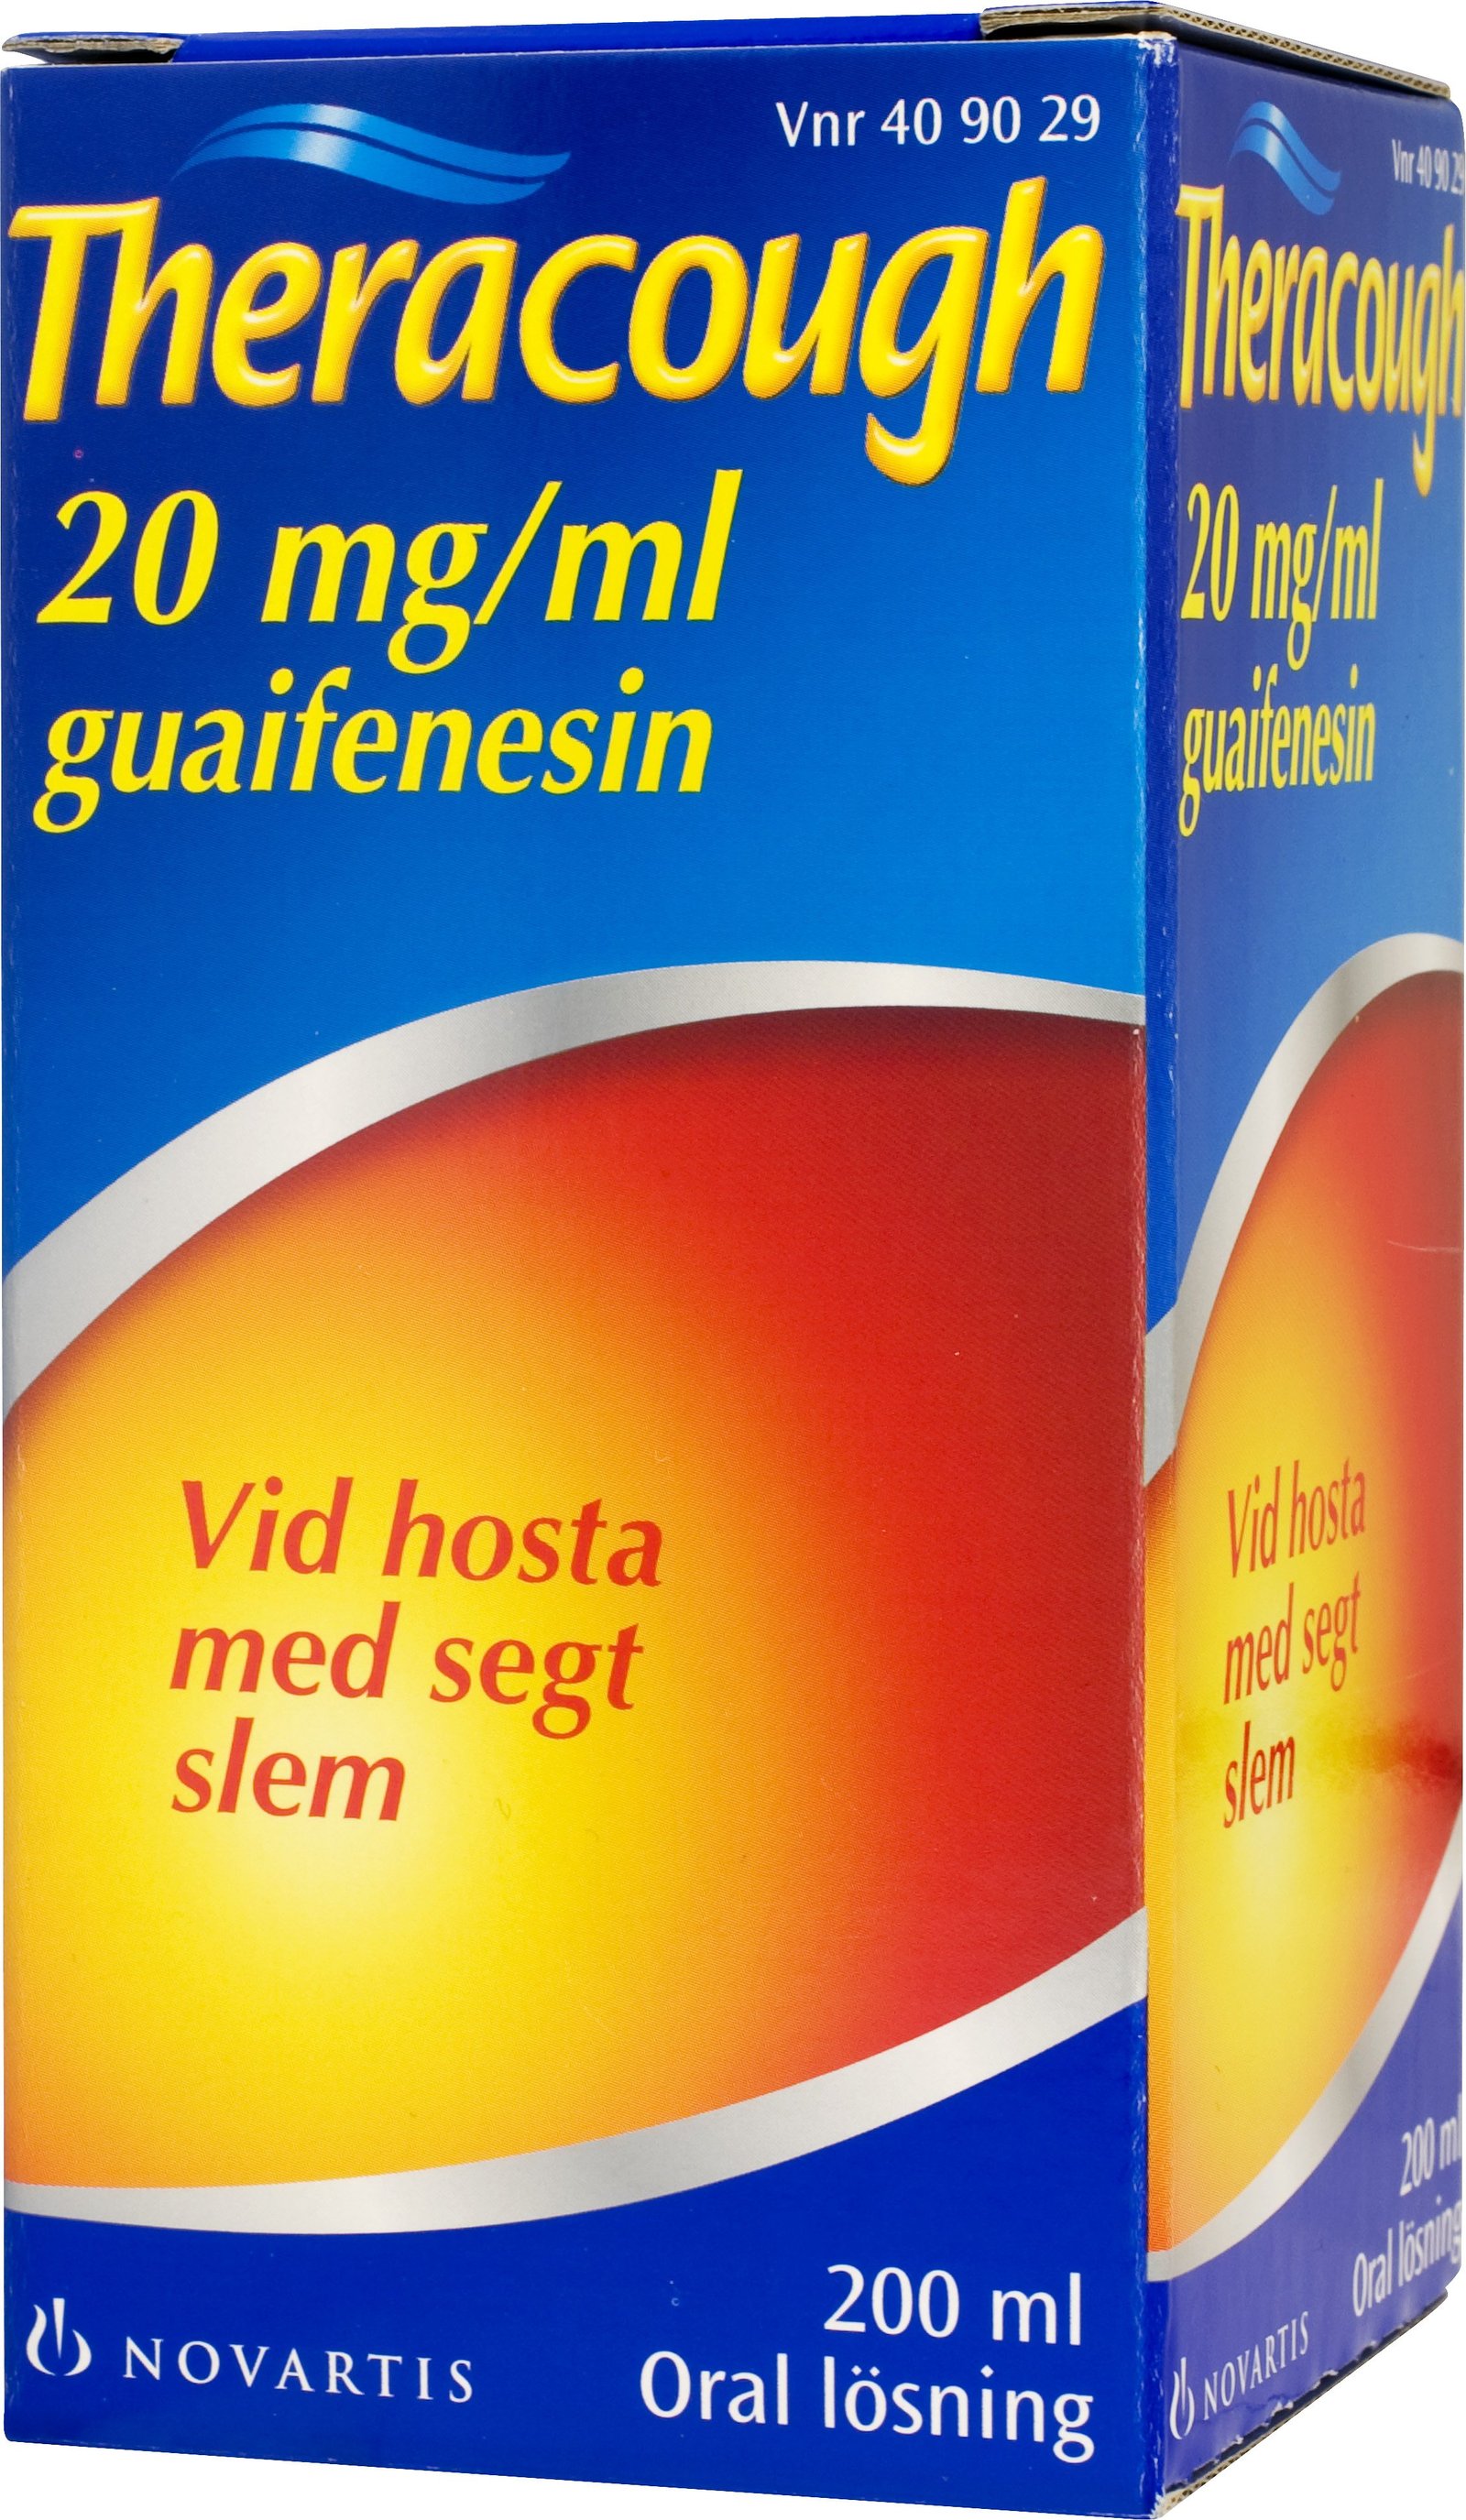 Theracough Hostmedicin vid slemhosta 20 mg/ml 200 ml